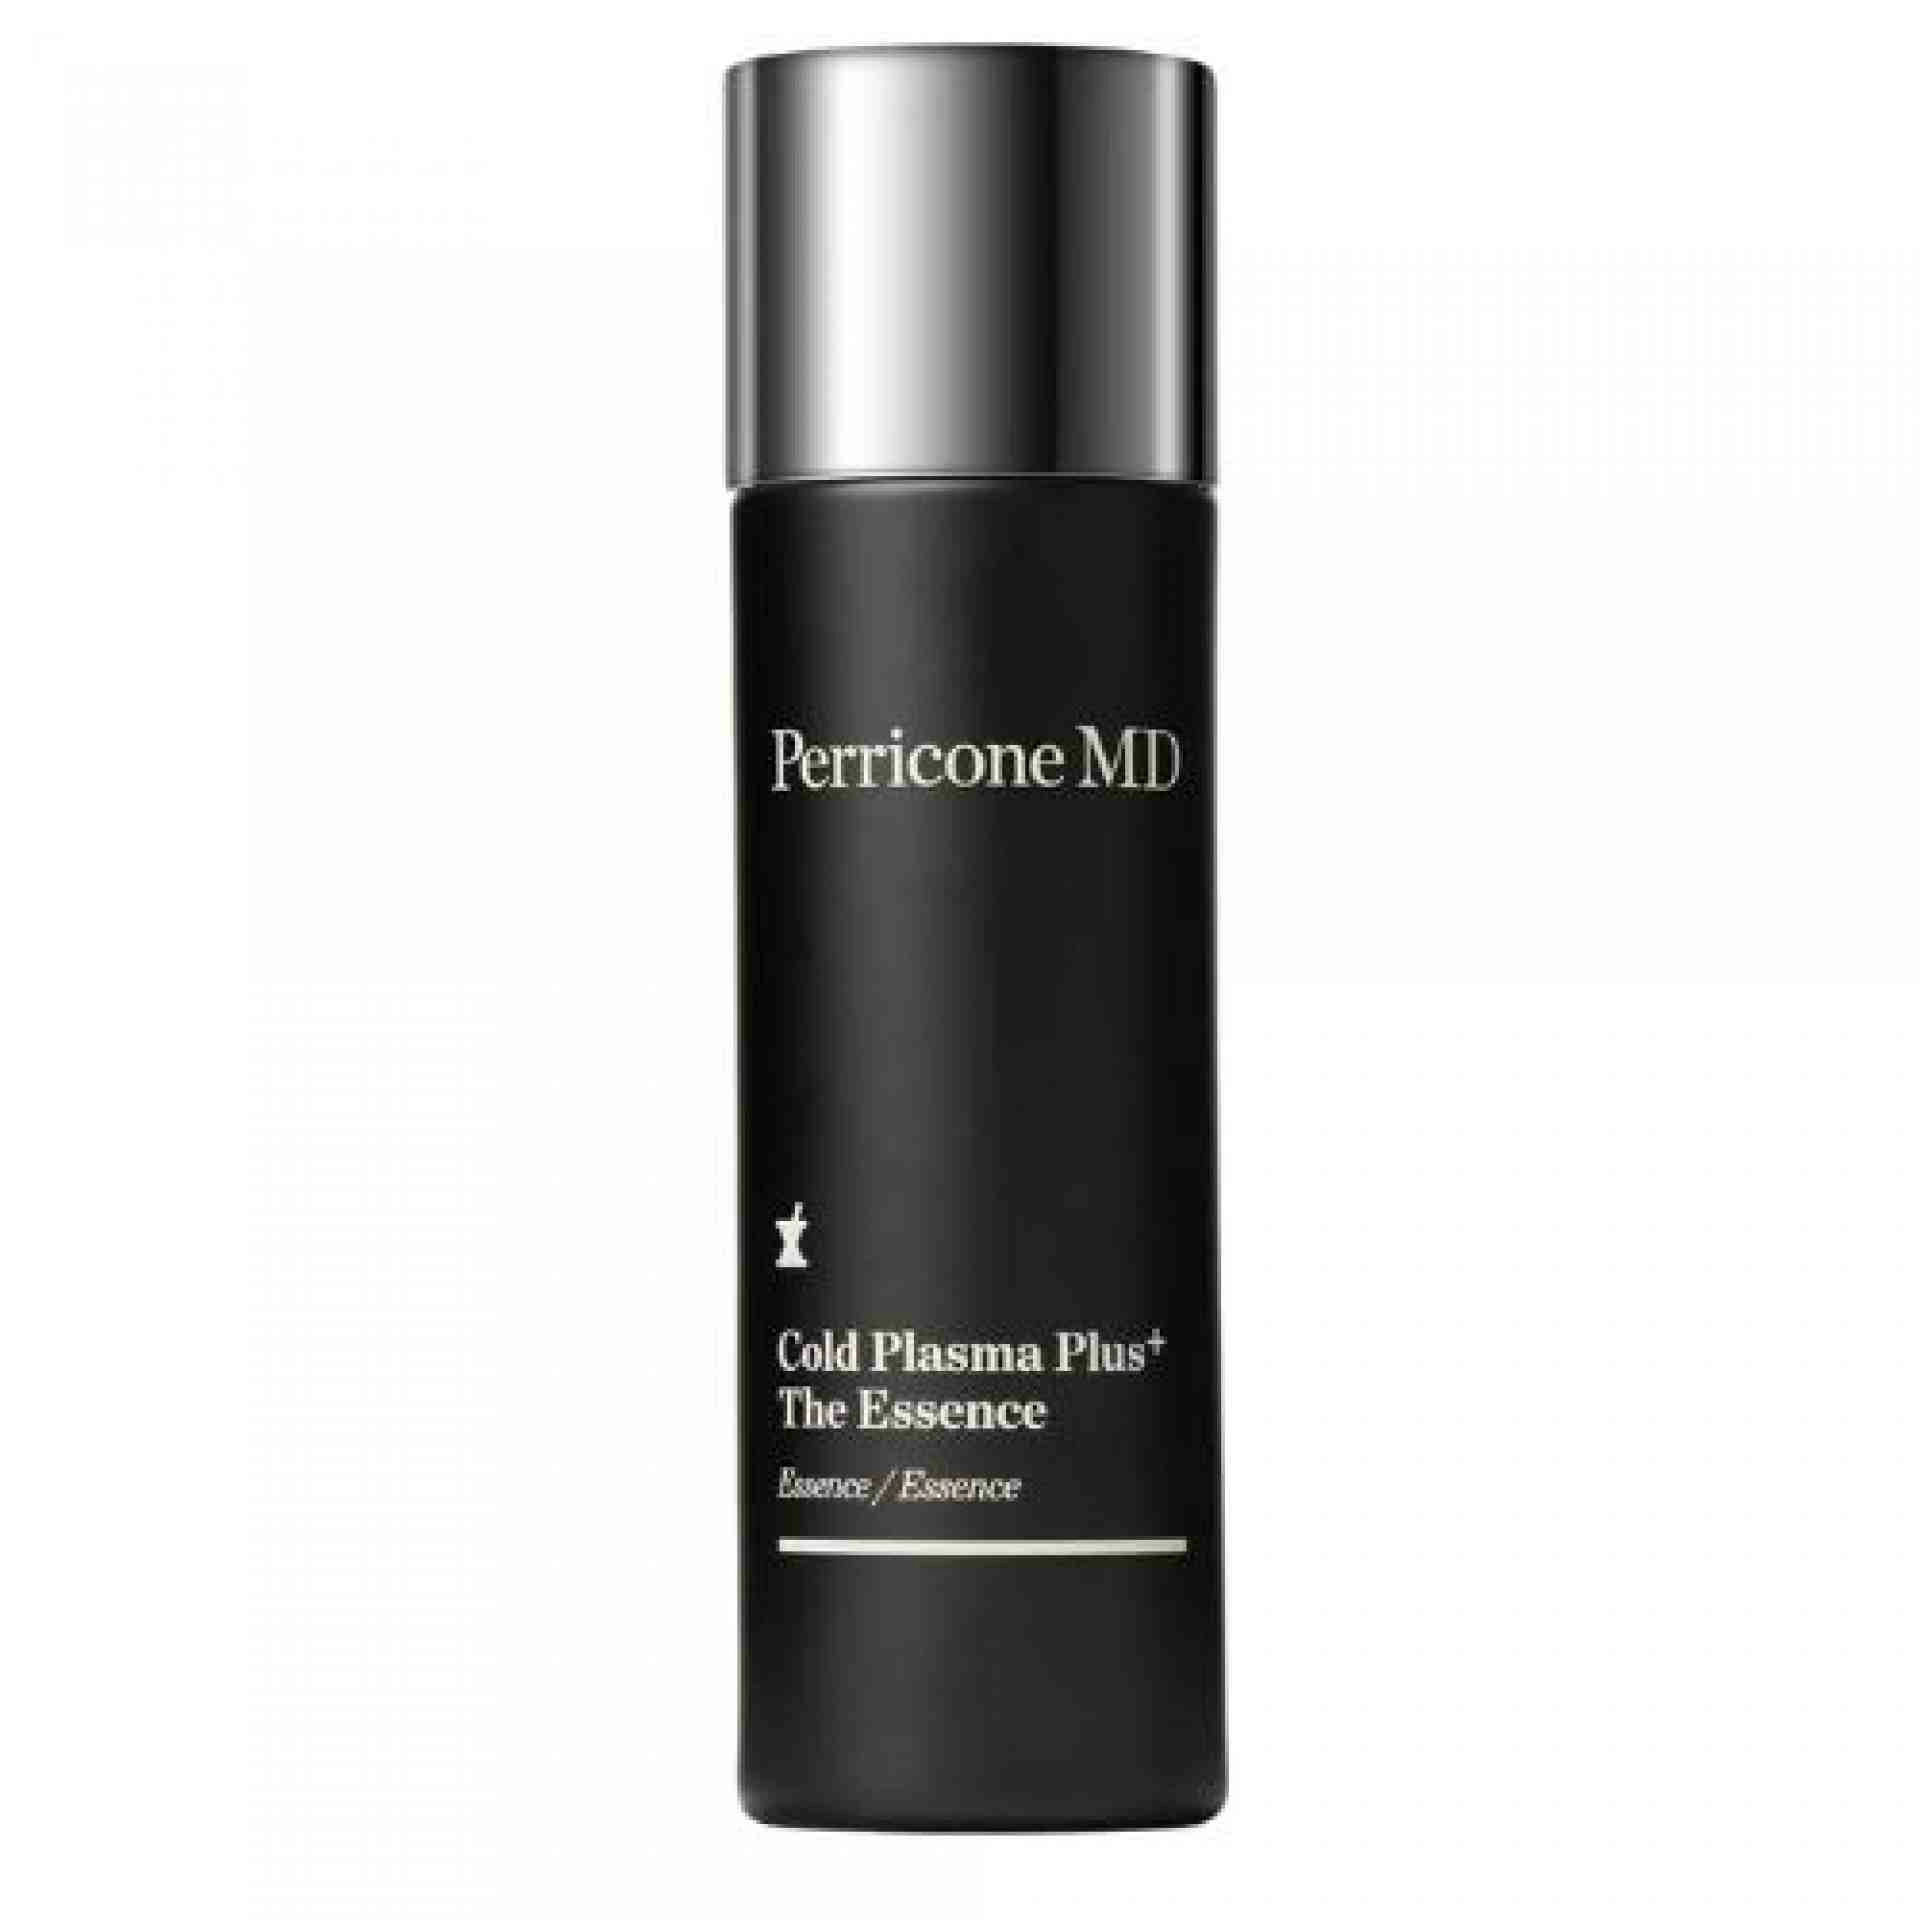 The Essence | Esencia antiedad hidratante 140ml - Cold Plasma Plus+ - Perricone MD ®